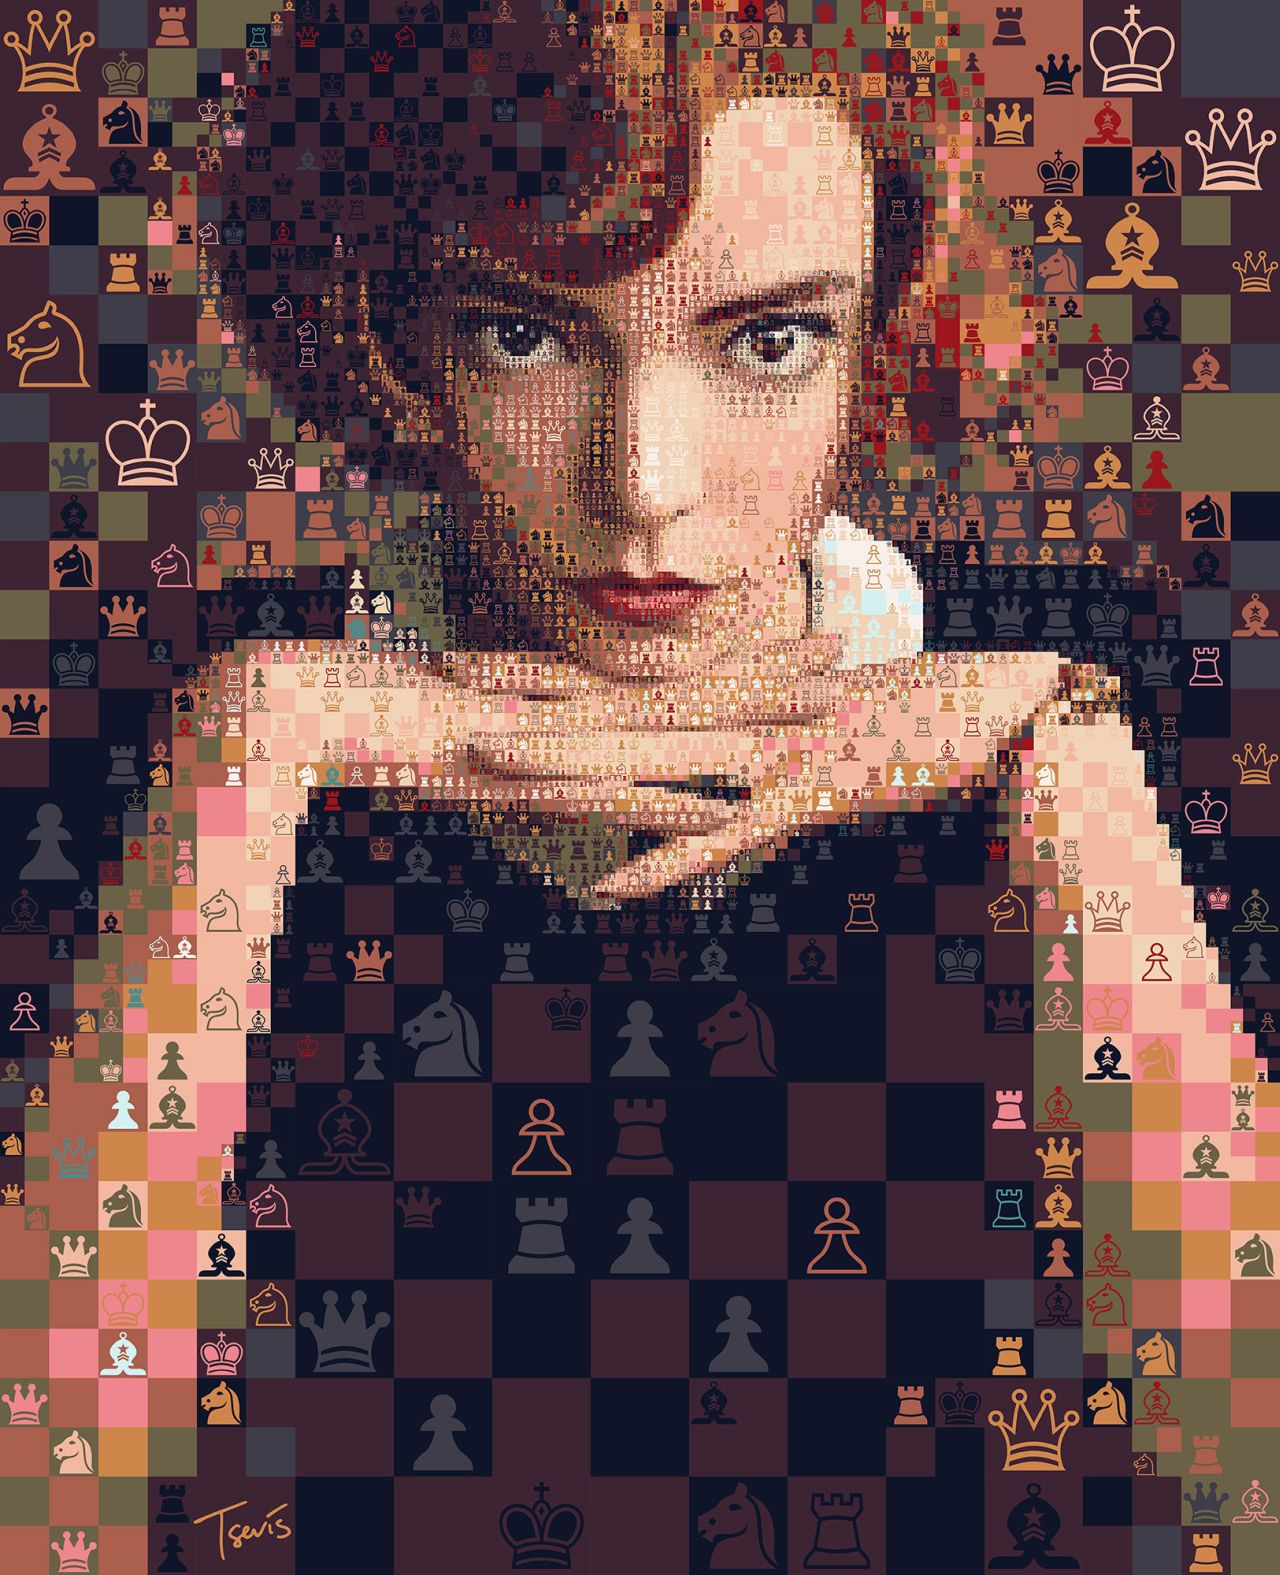 portrait photo mosaic art queen gambit by charis tsevis